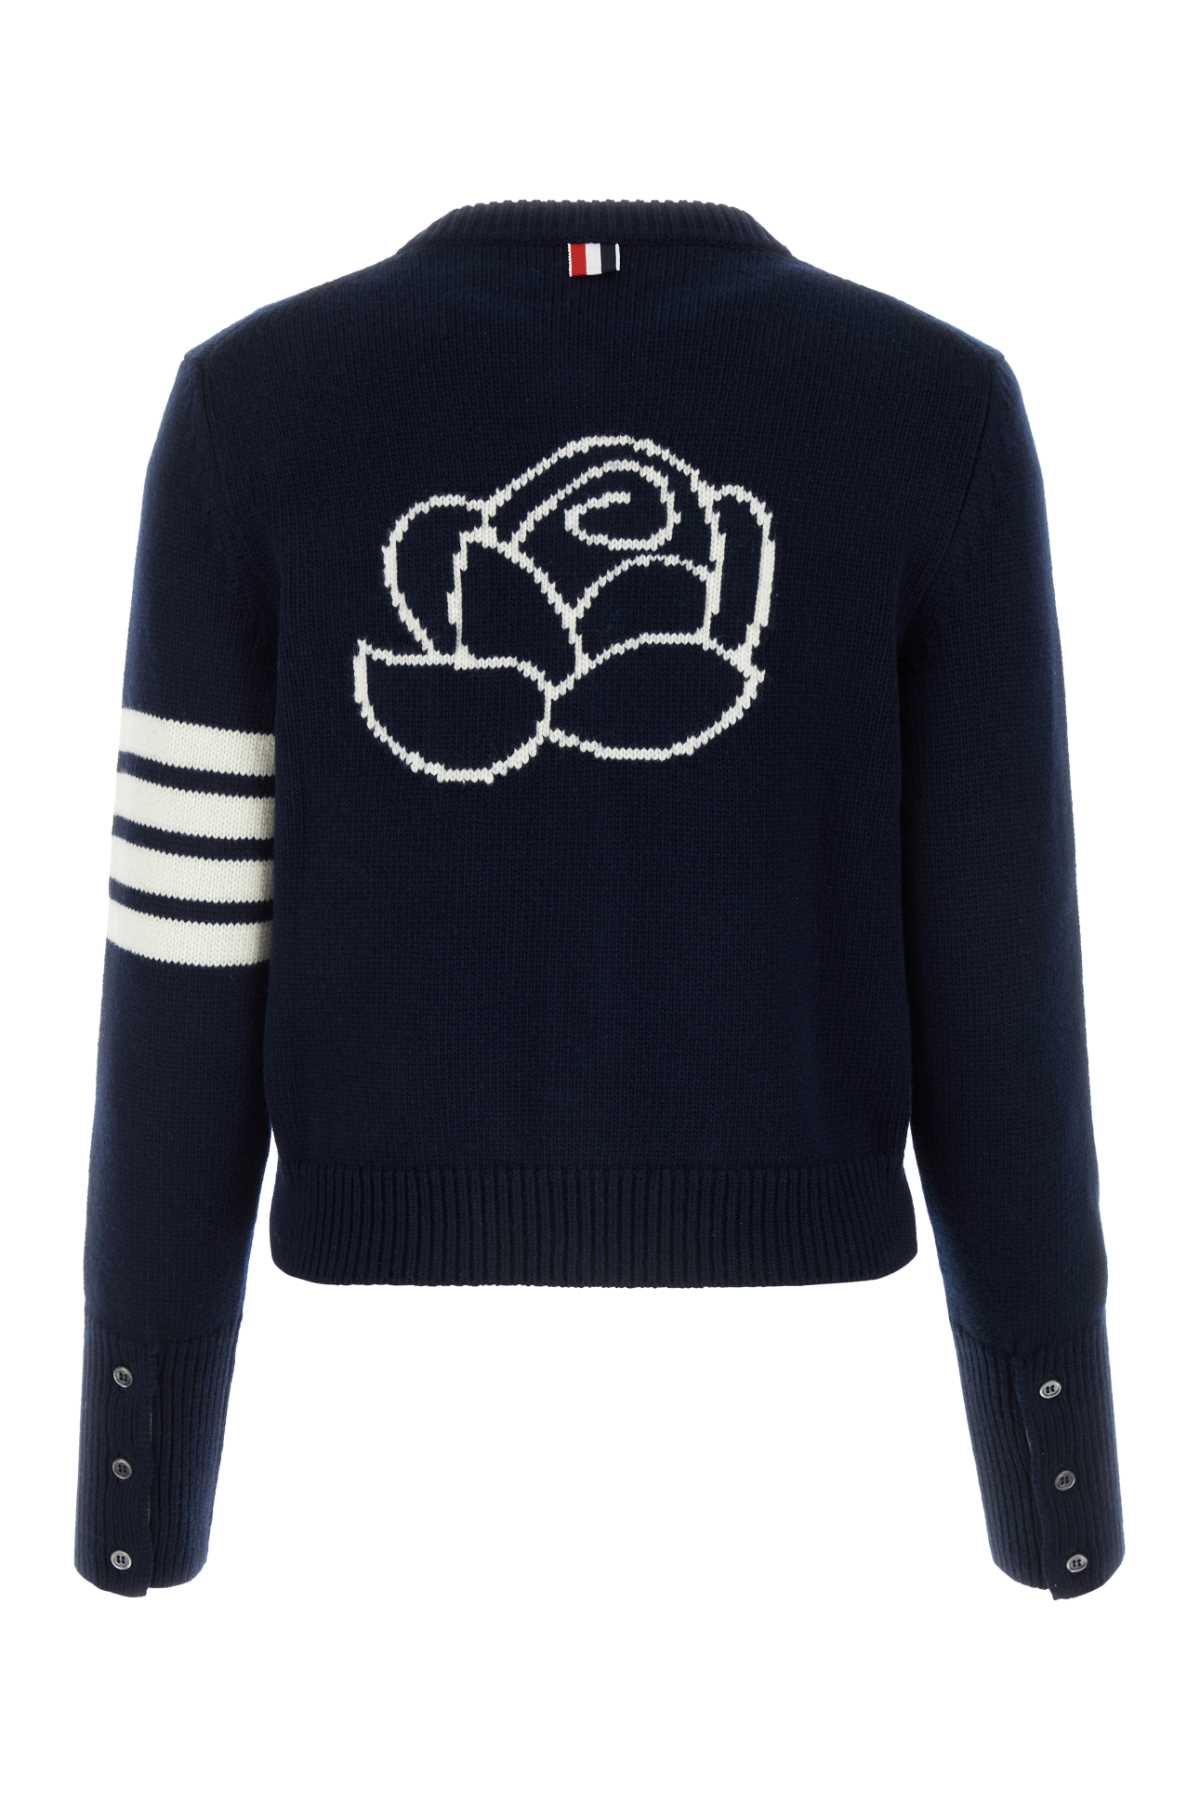 Shop Thom Browne Navy Blue Wool Cardigan